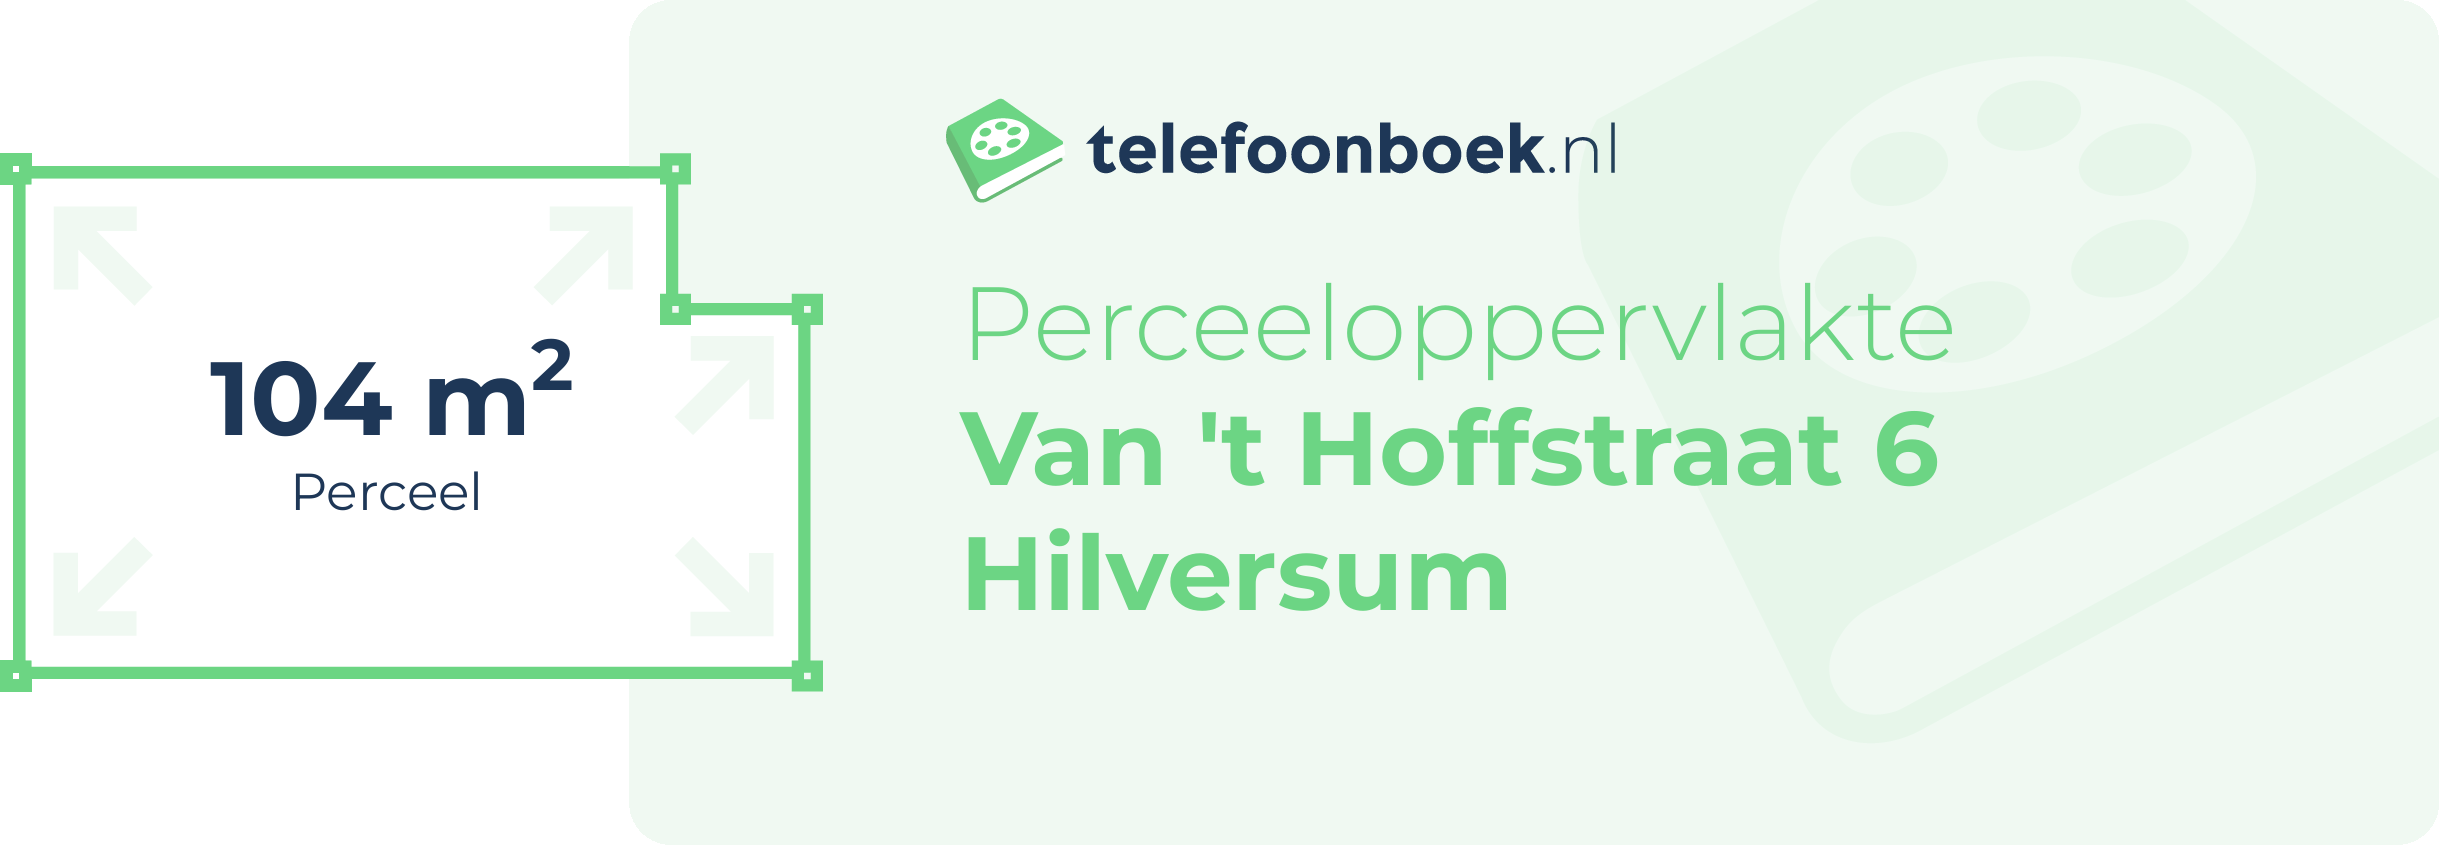 Perceeloppervlakte Van 't Hoffstraat 6 Hilversum